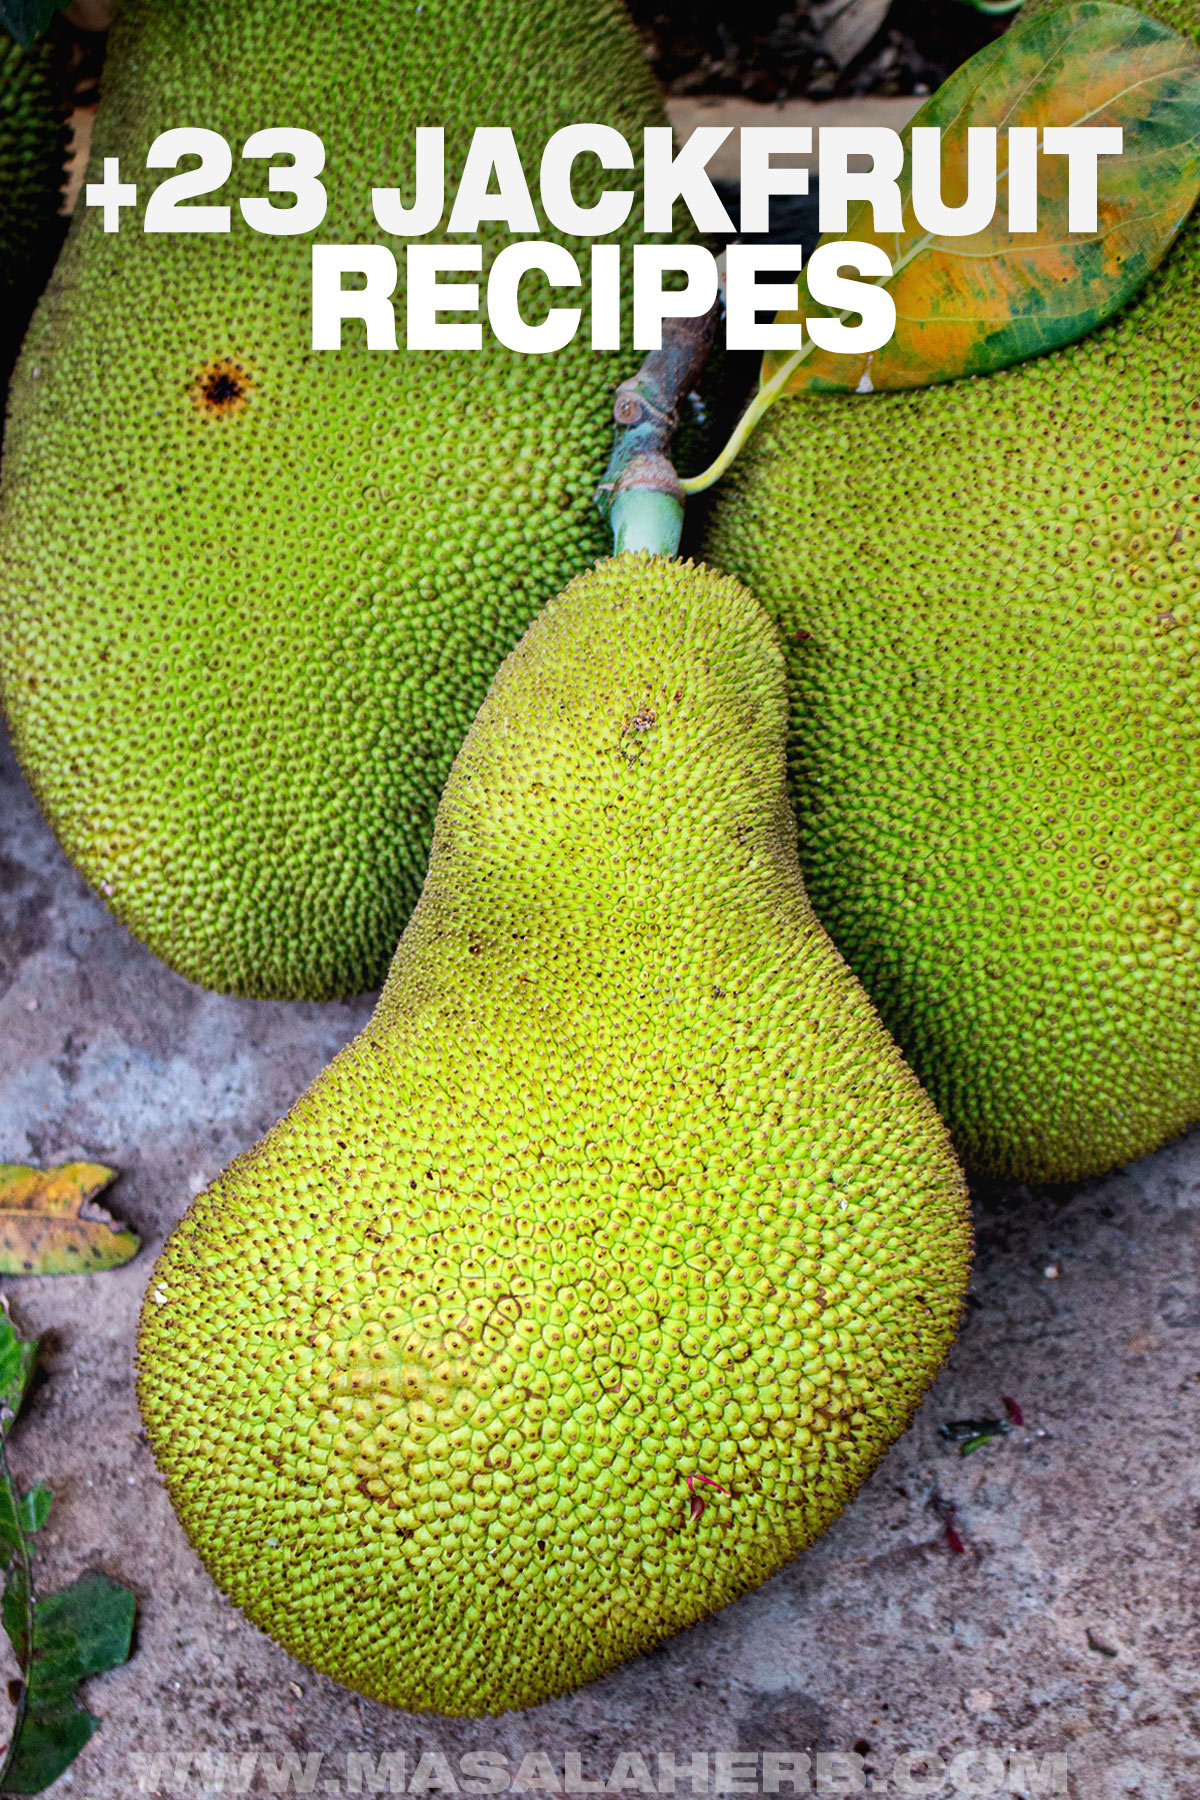 +23 Jackfruit Recipes (Ripe and Unripe) pin cover